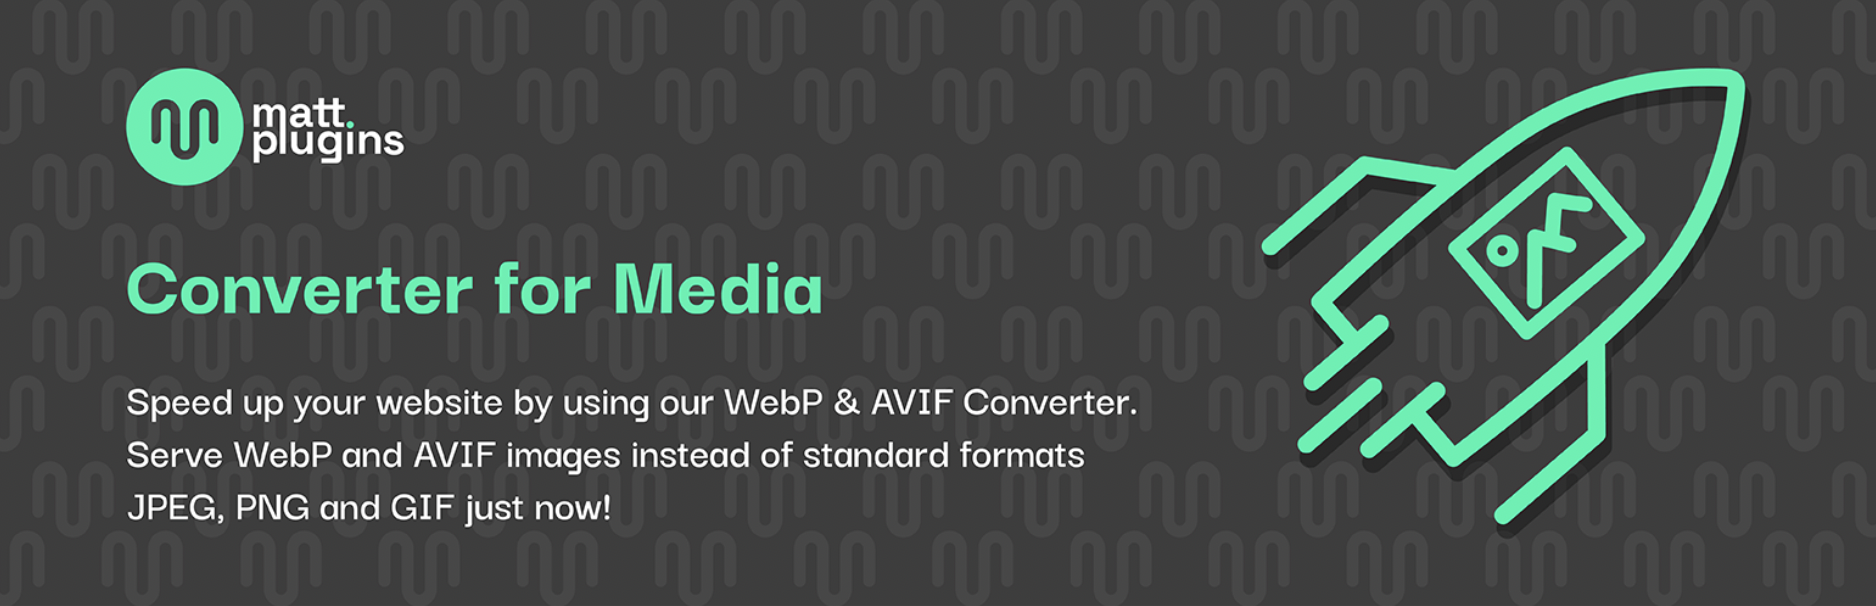 Screenshot WordPress Plugin Konverter für Medien WebP Converter for media